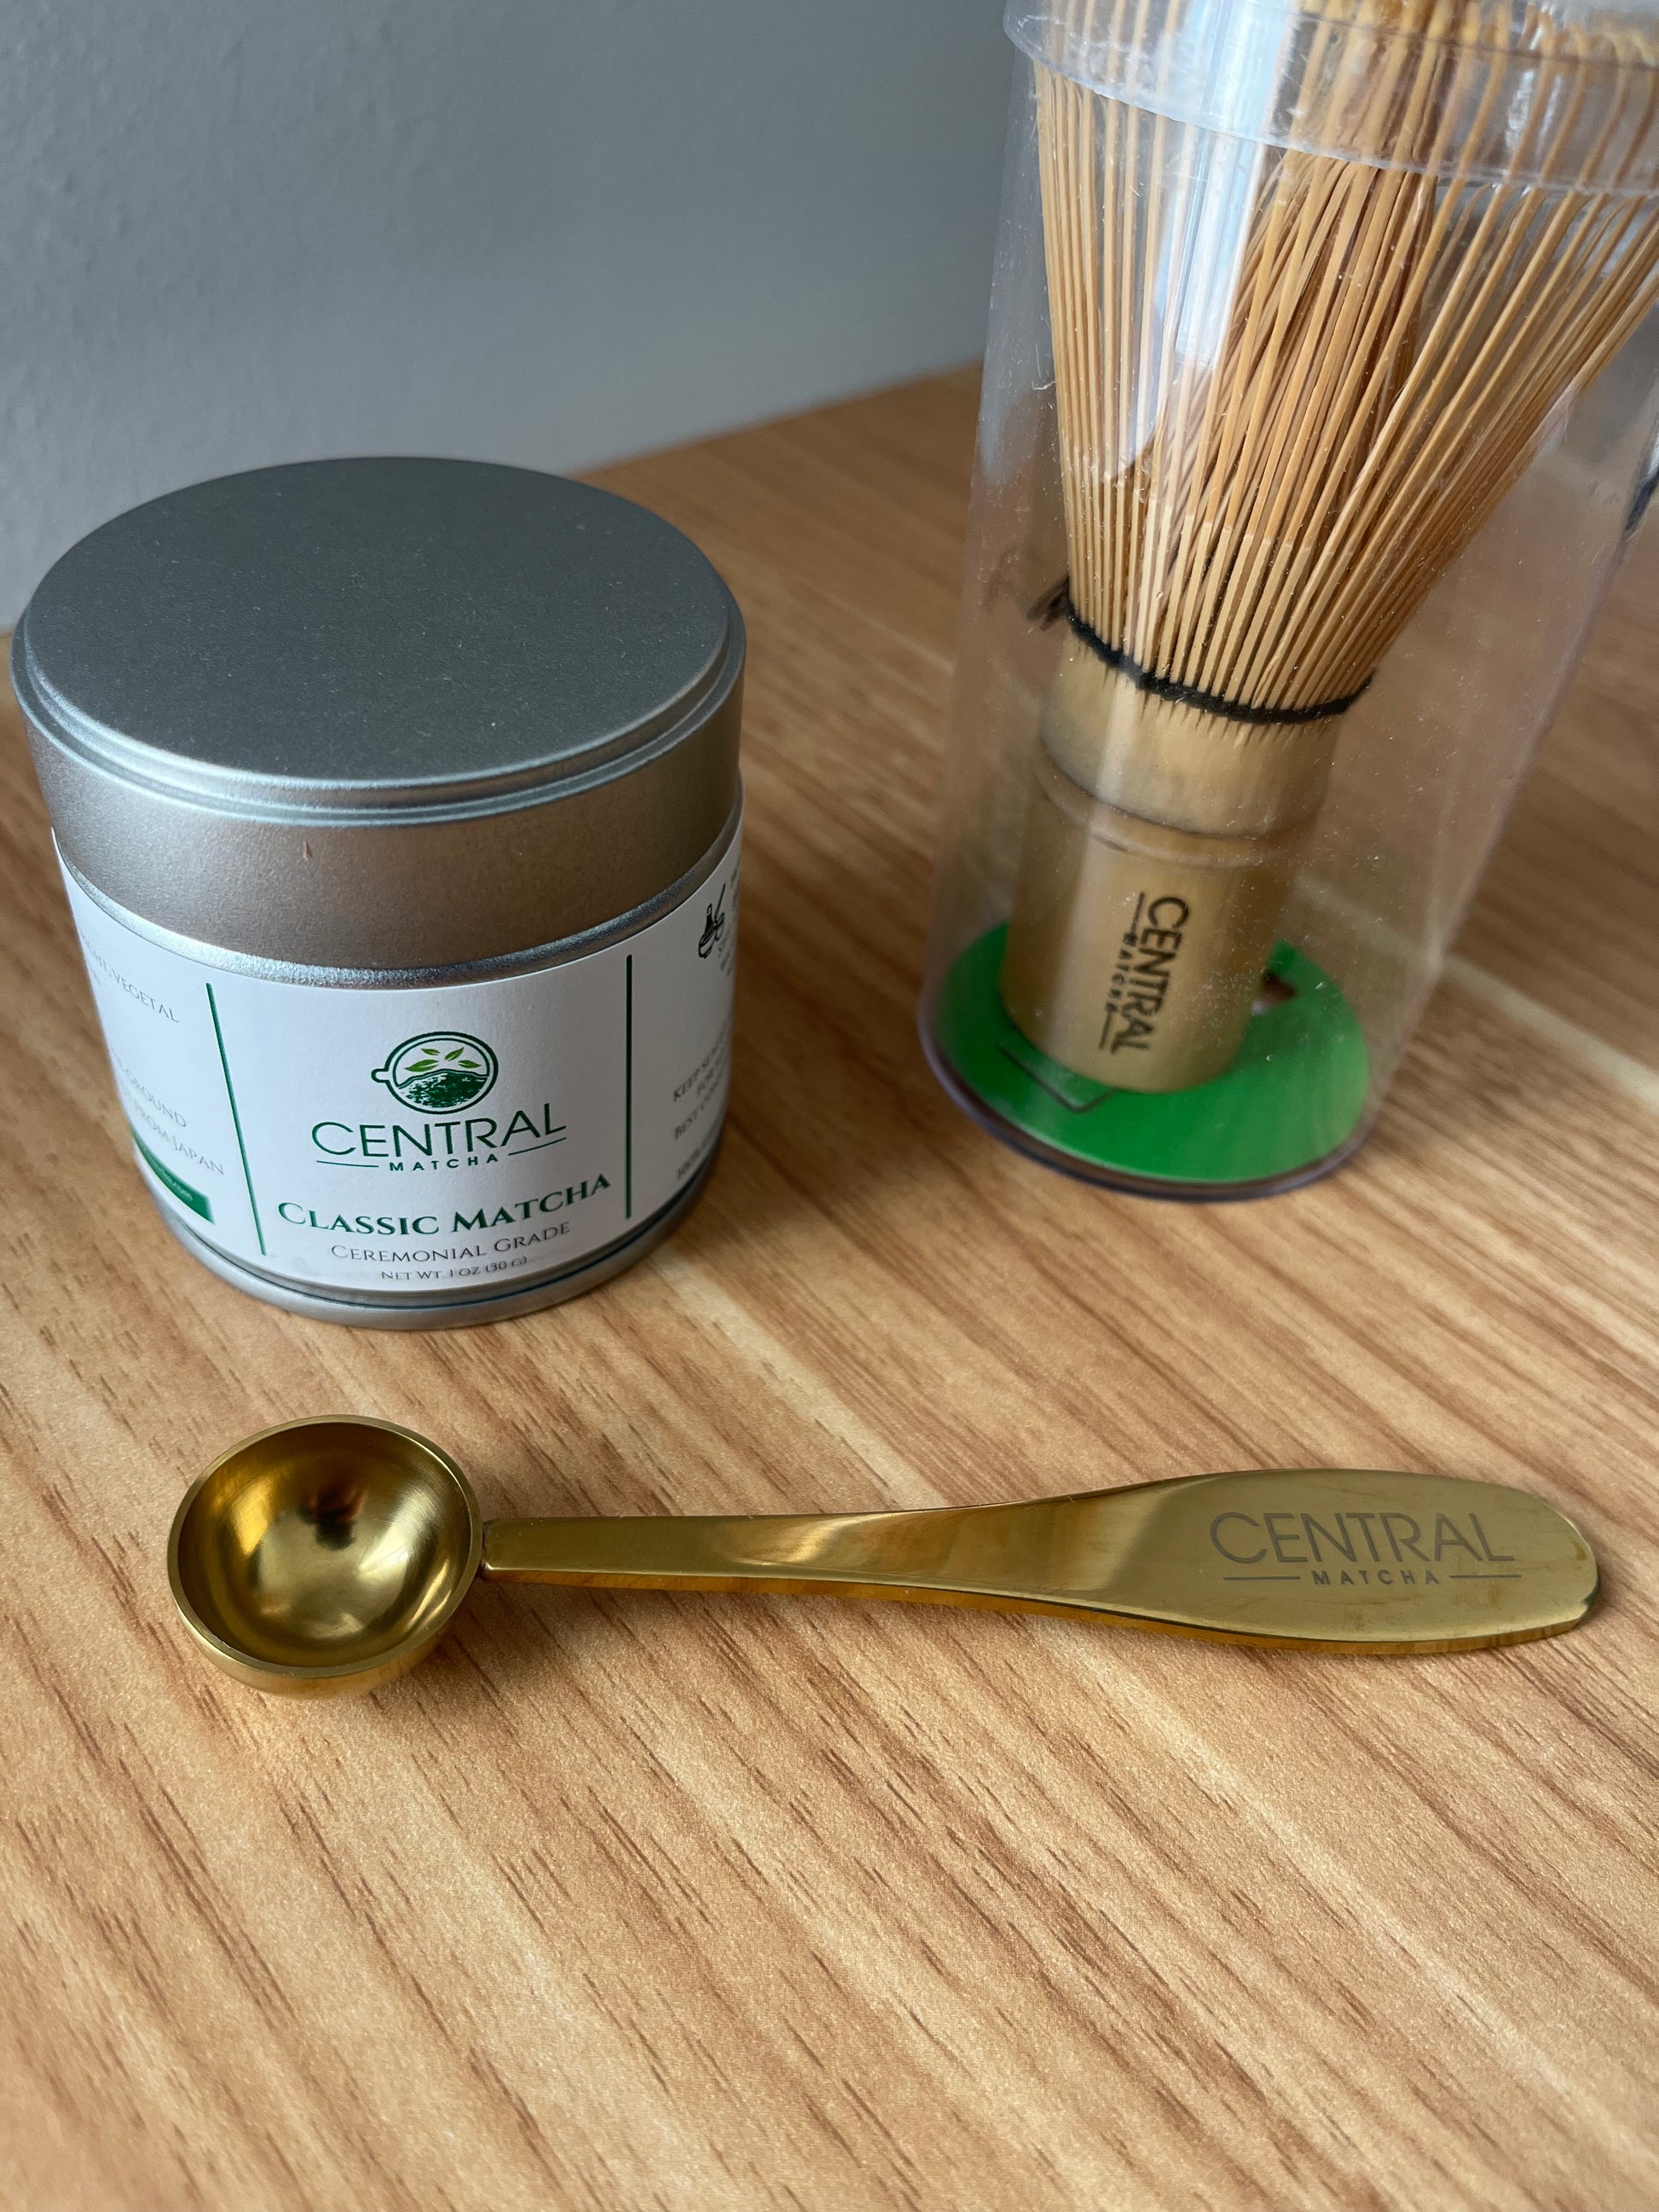 Matcha Tool Mini Kit – Clarity Tea